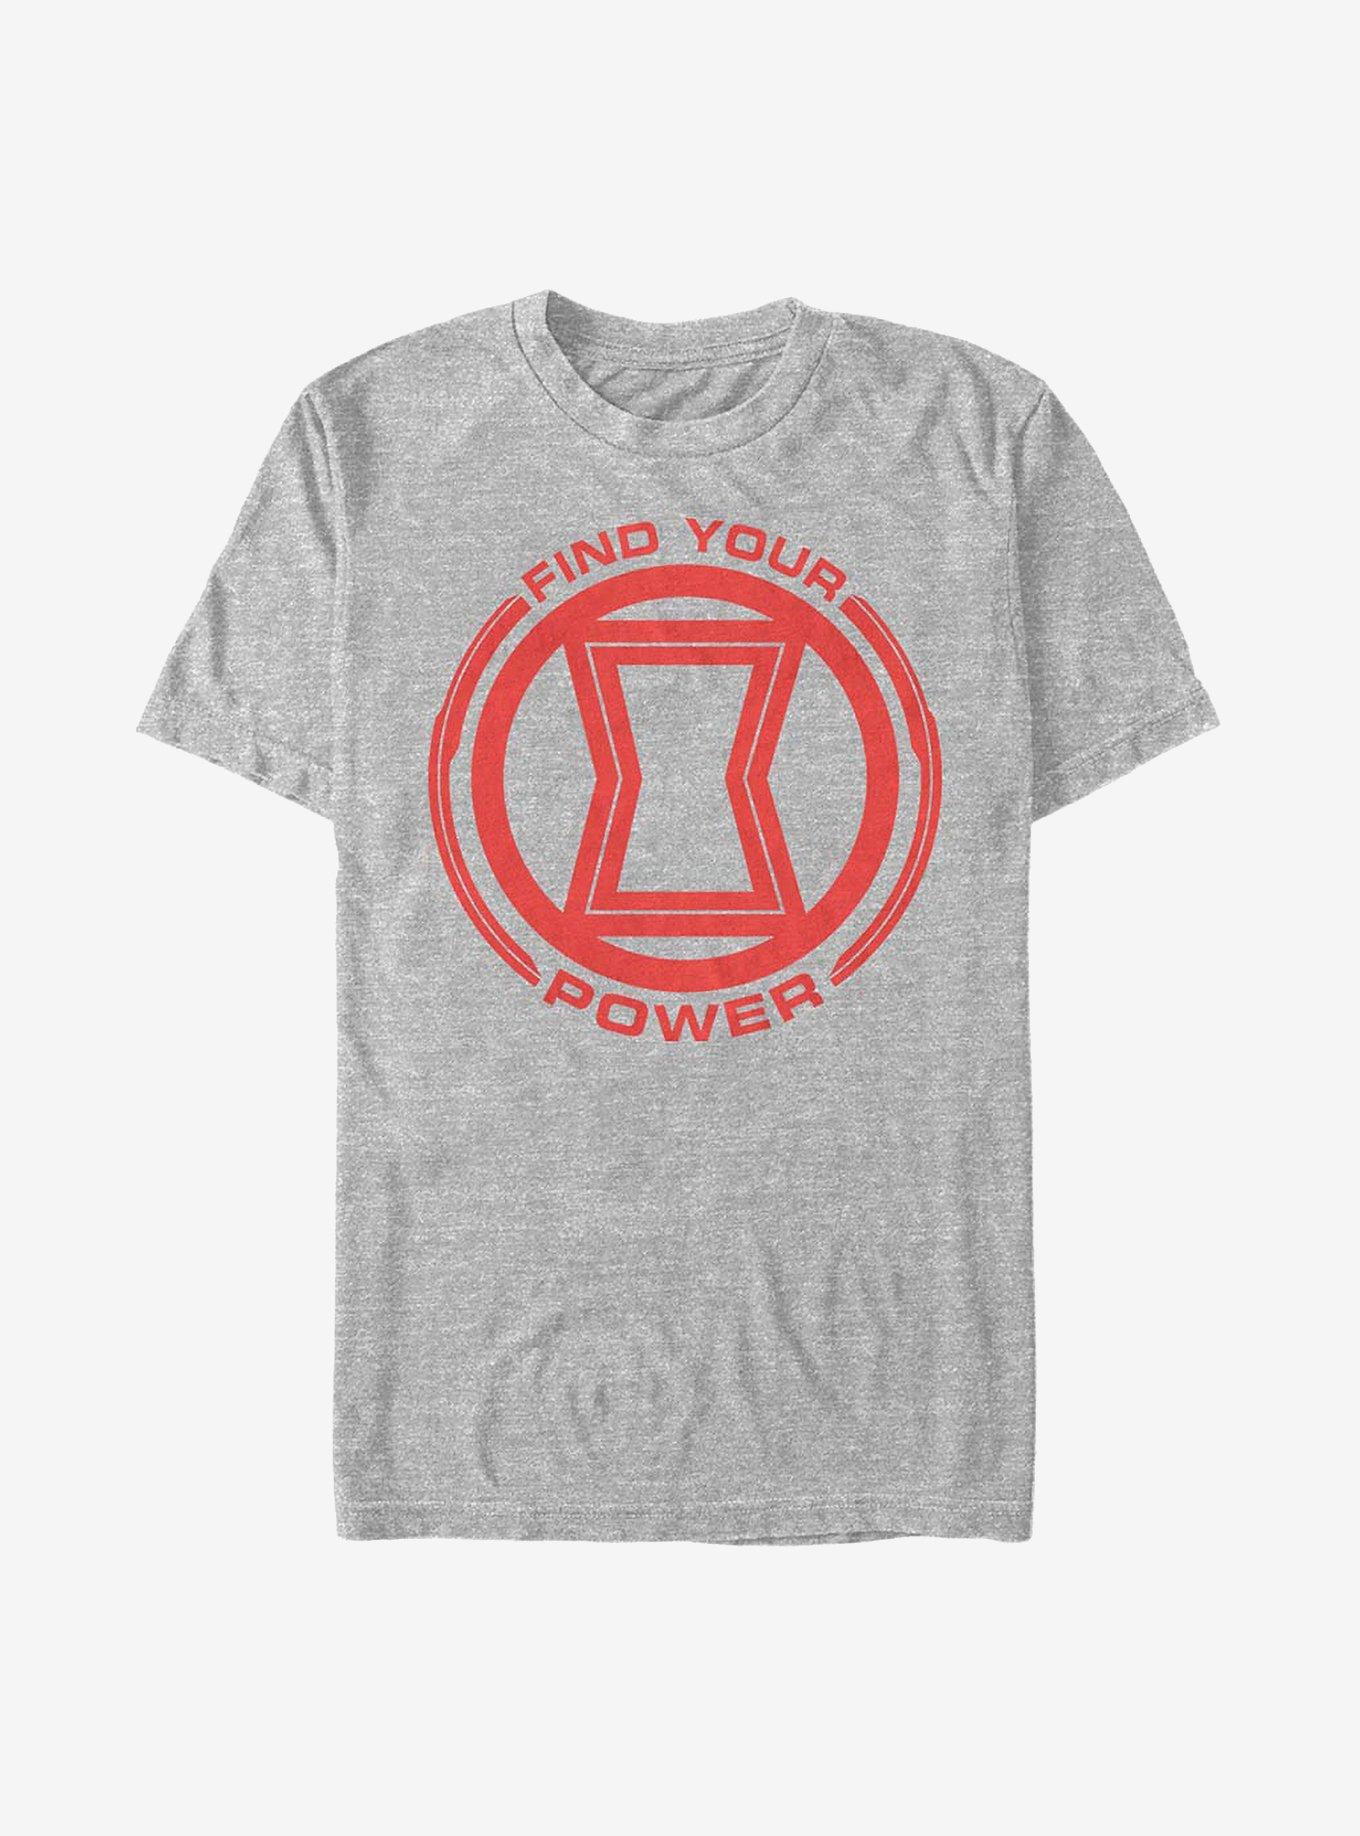 Marvel Black Widow Power Of T-Shirt